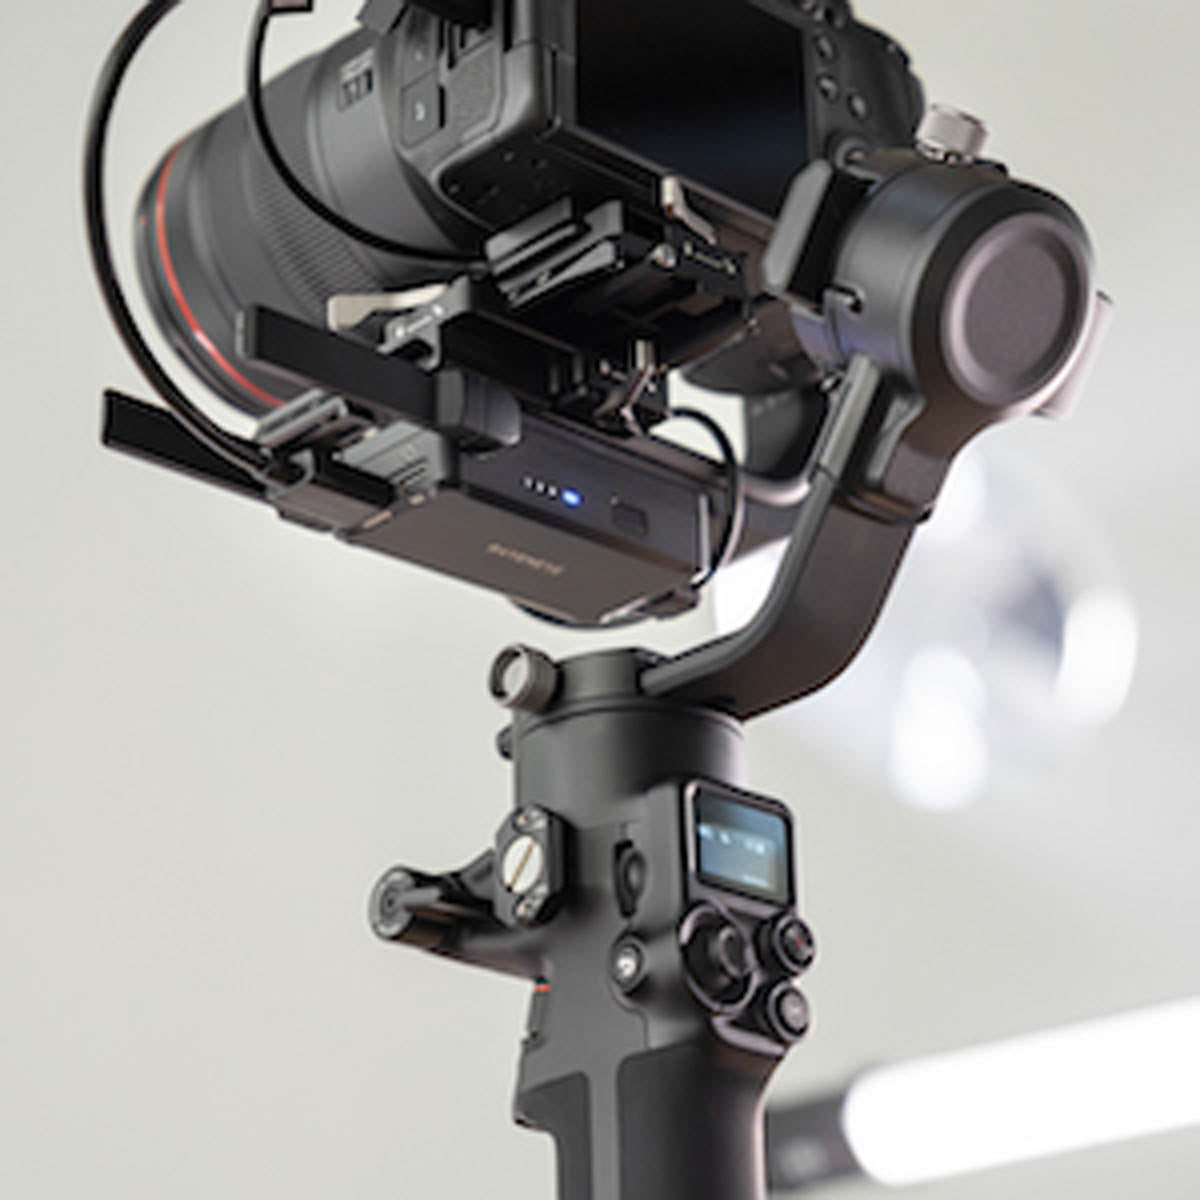 DJI RSC 2 Pro Combo Gimbal Stabilizer for DSLR and Cinema Cameras